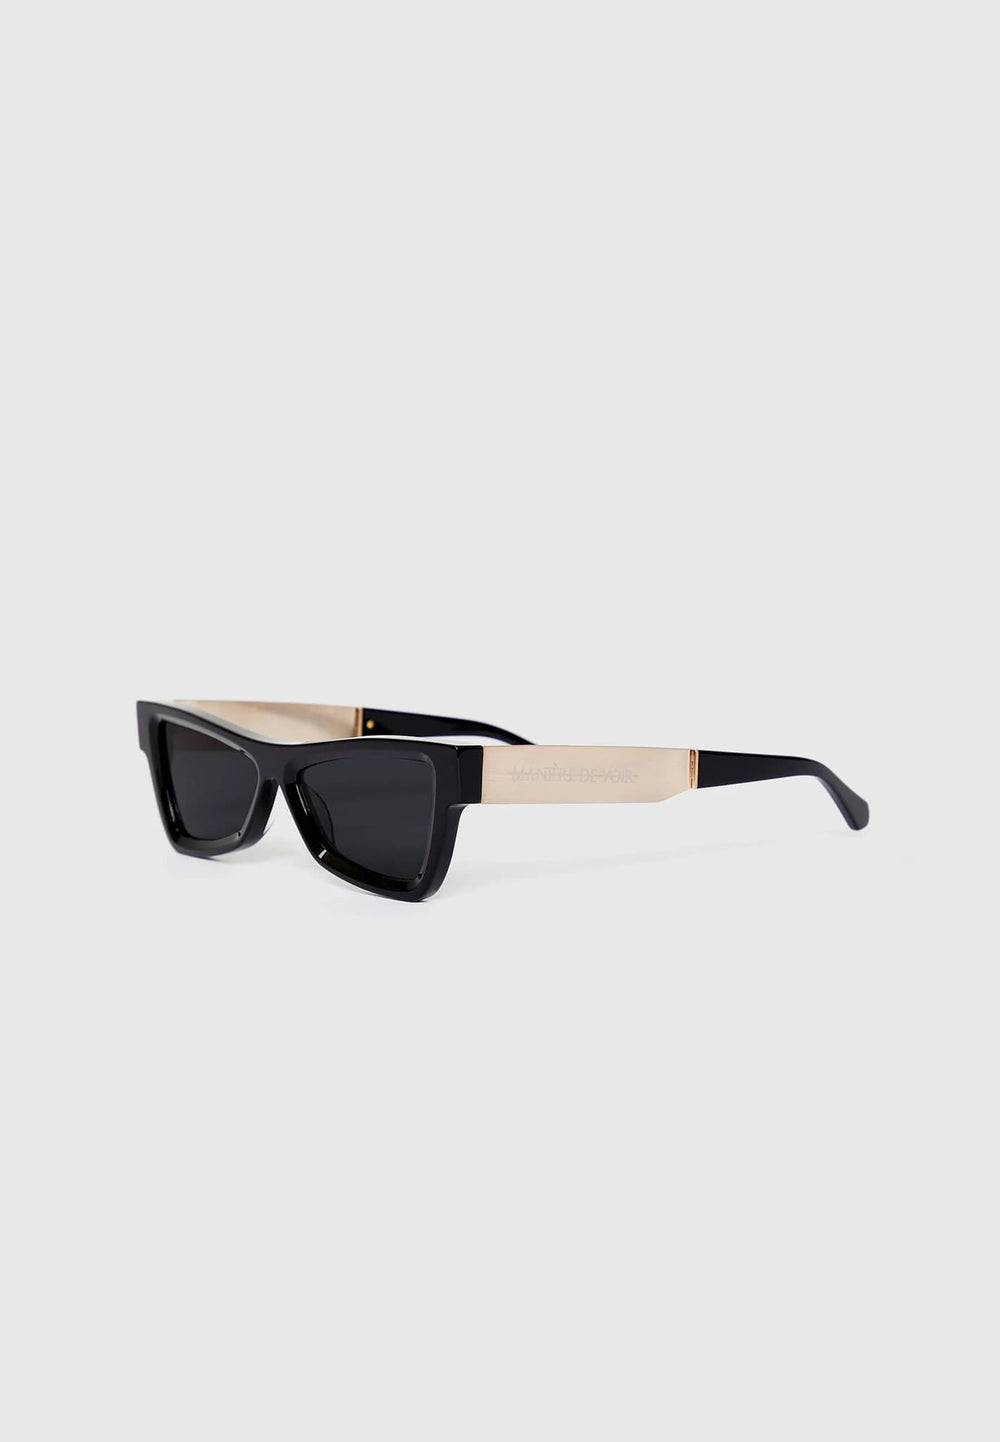 corsica-sunglasses-gloss-black